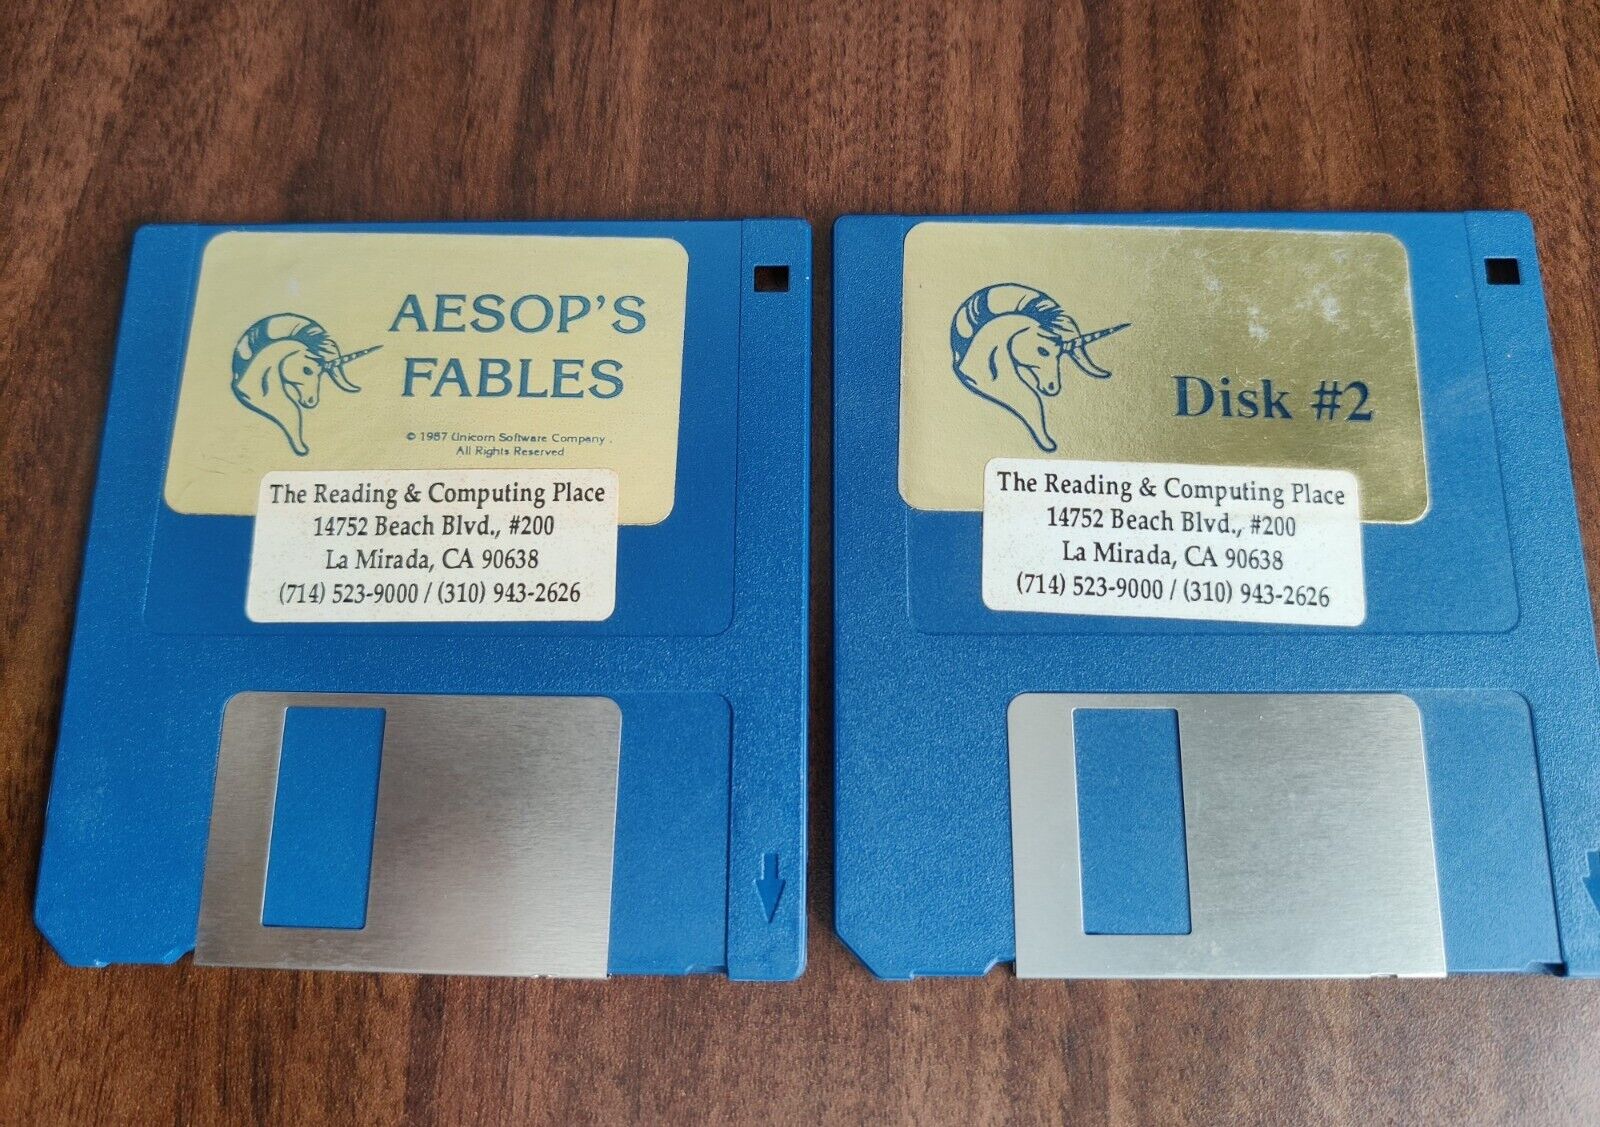 Aesop\'s Fables 1988 by Unicorn Software for Apple II IIe IIc IIgs - Tested RARE